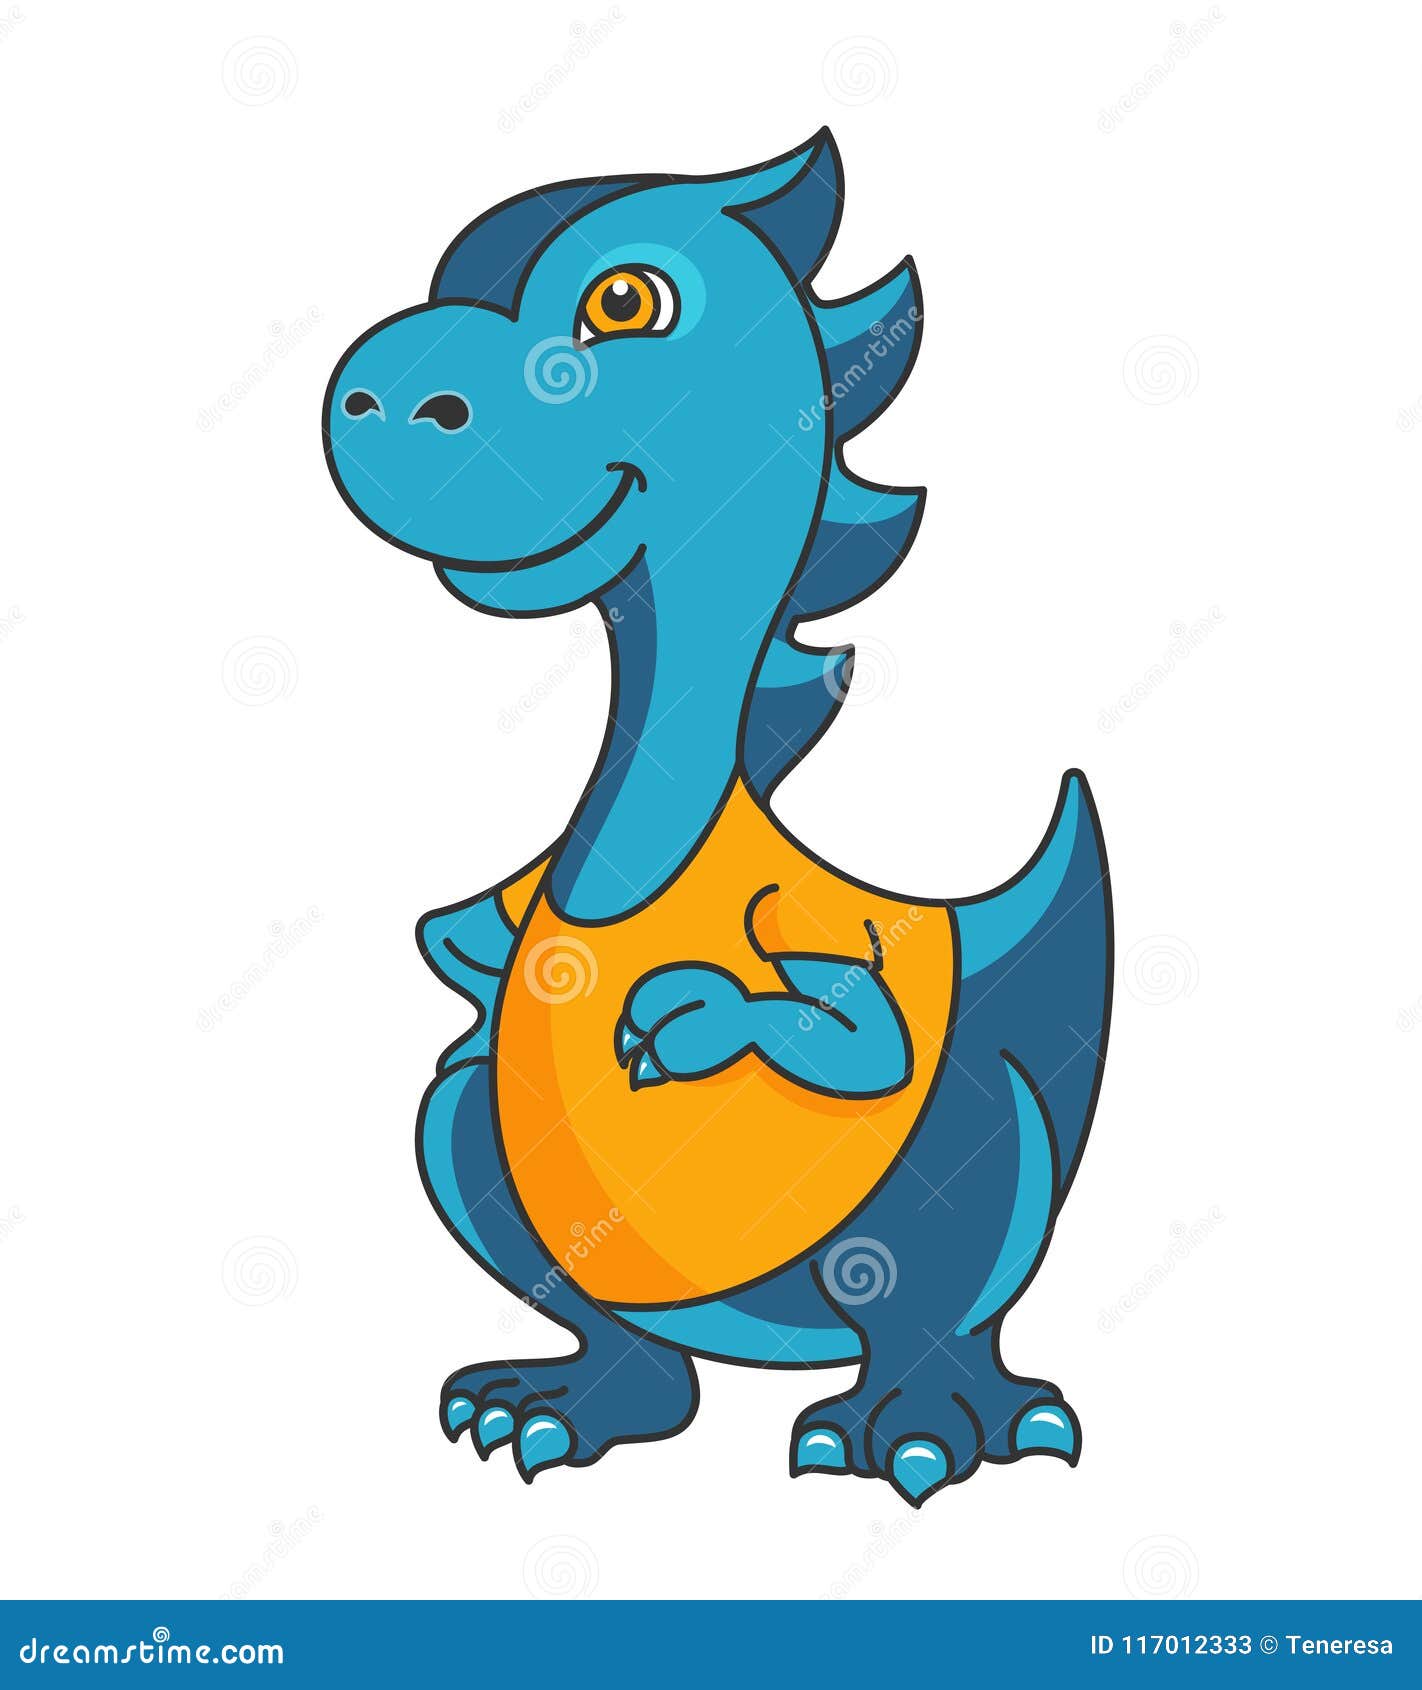 cartoon dragon or dinosaur mascot